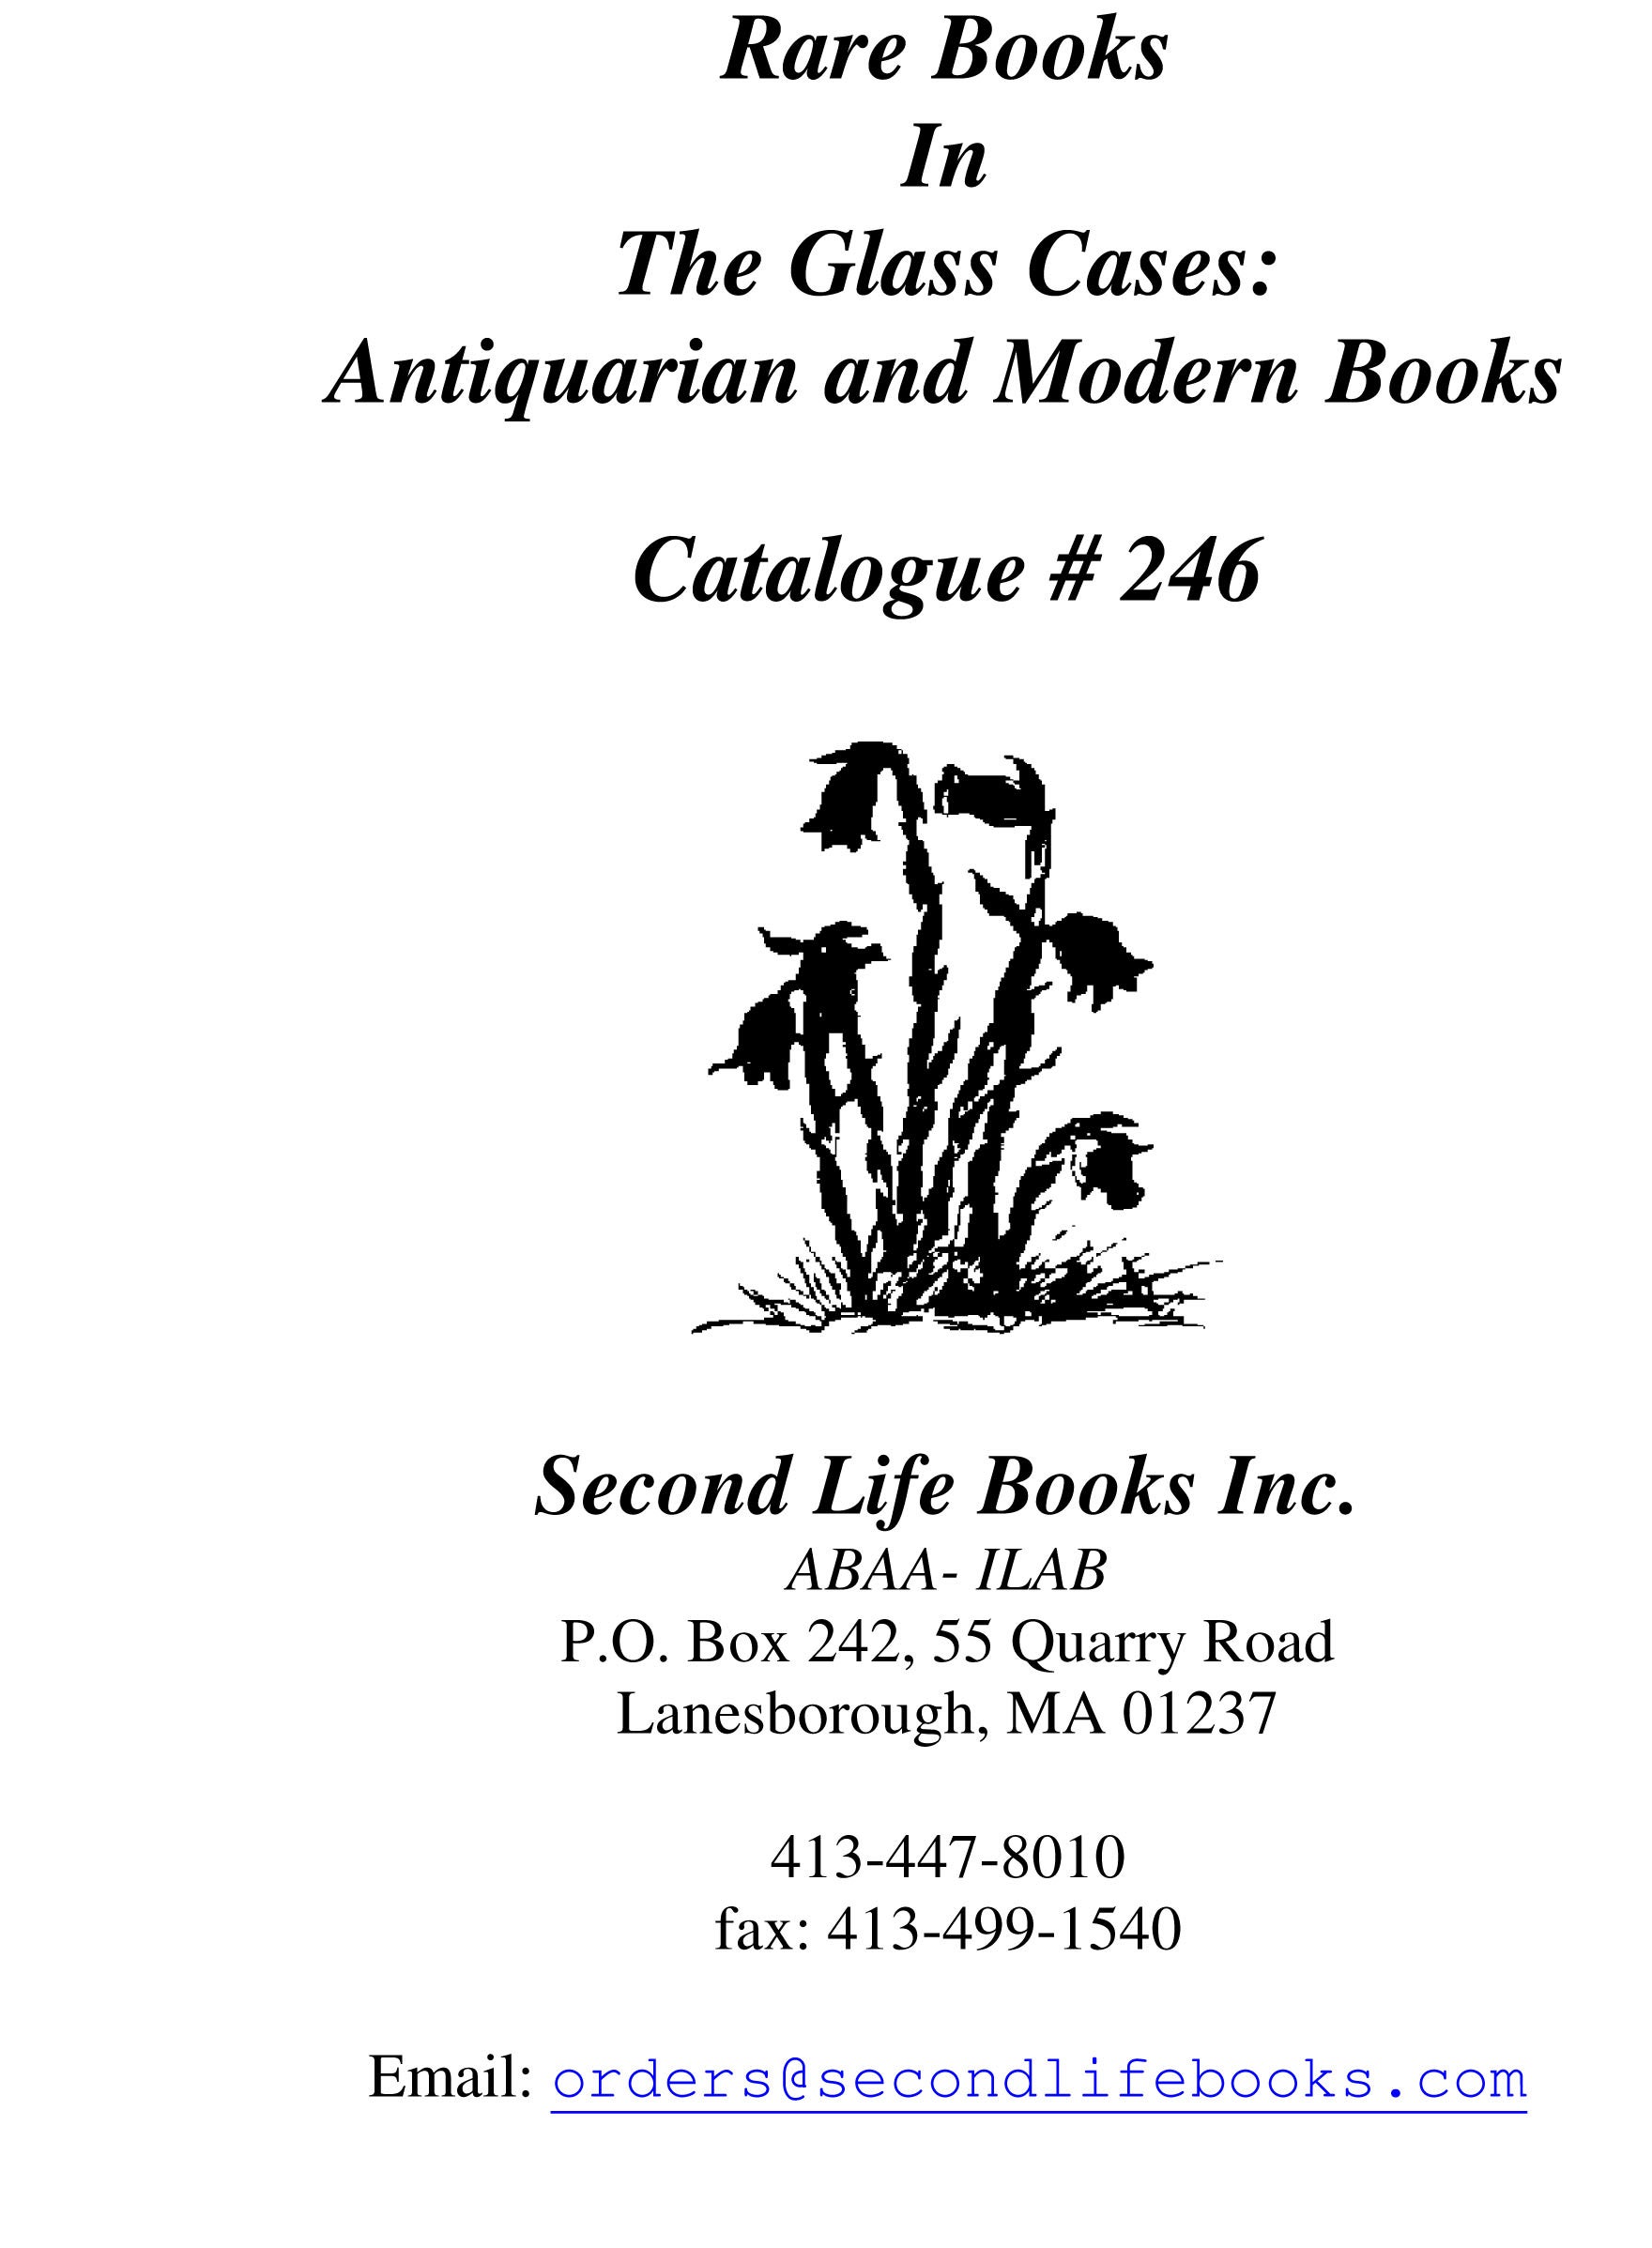 Catalog # 246: Rare Books in the Glass Cases